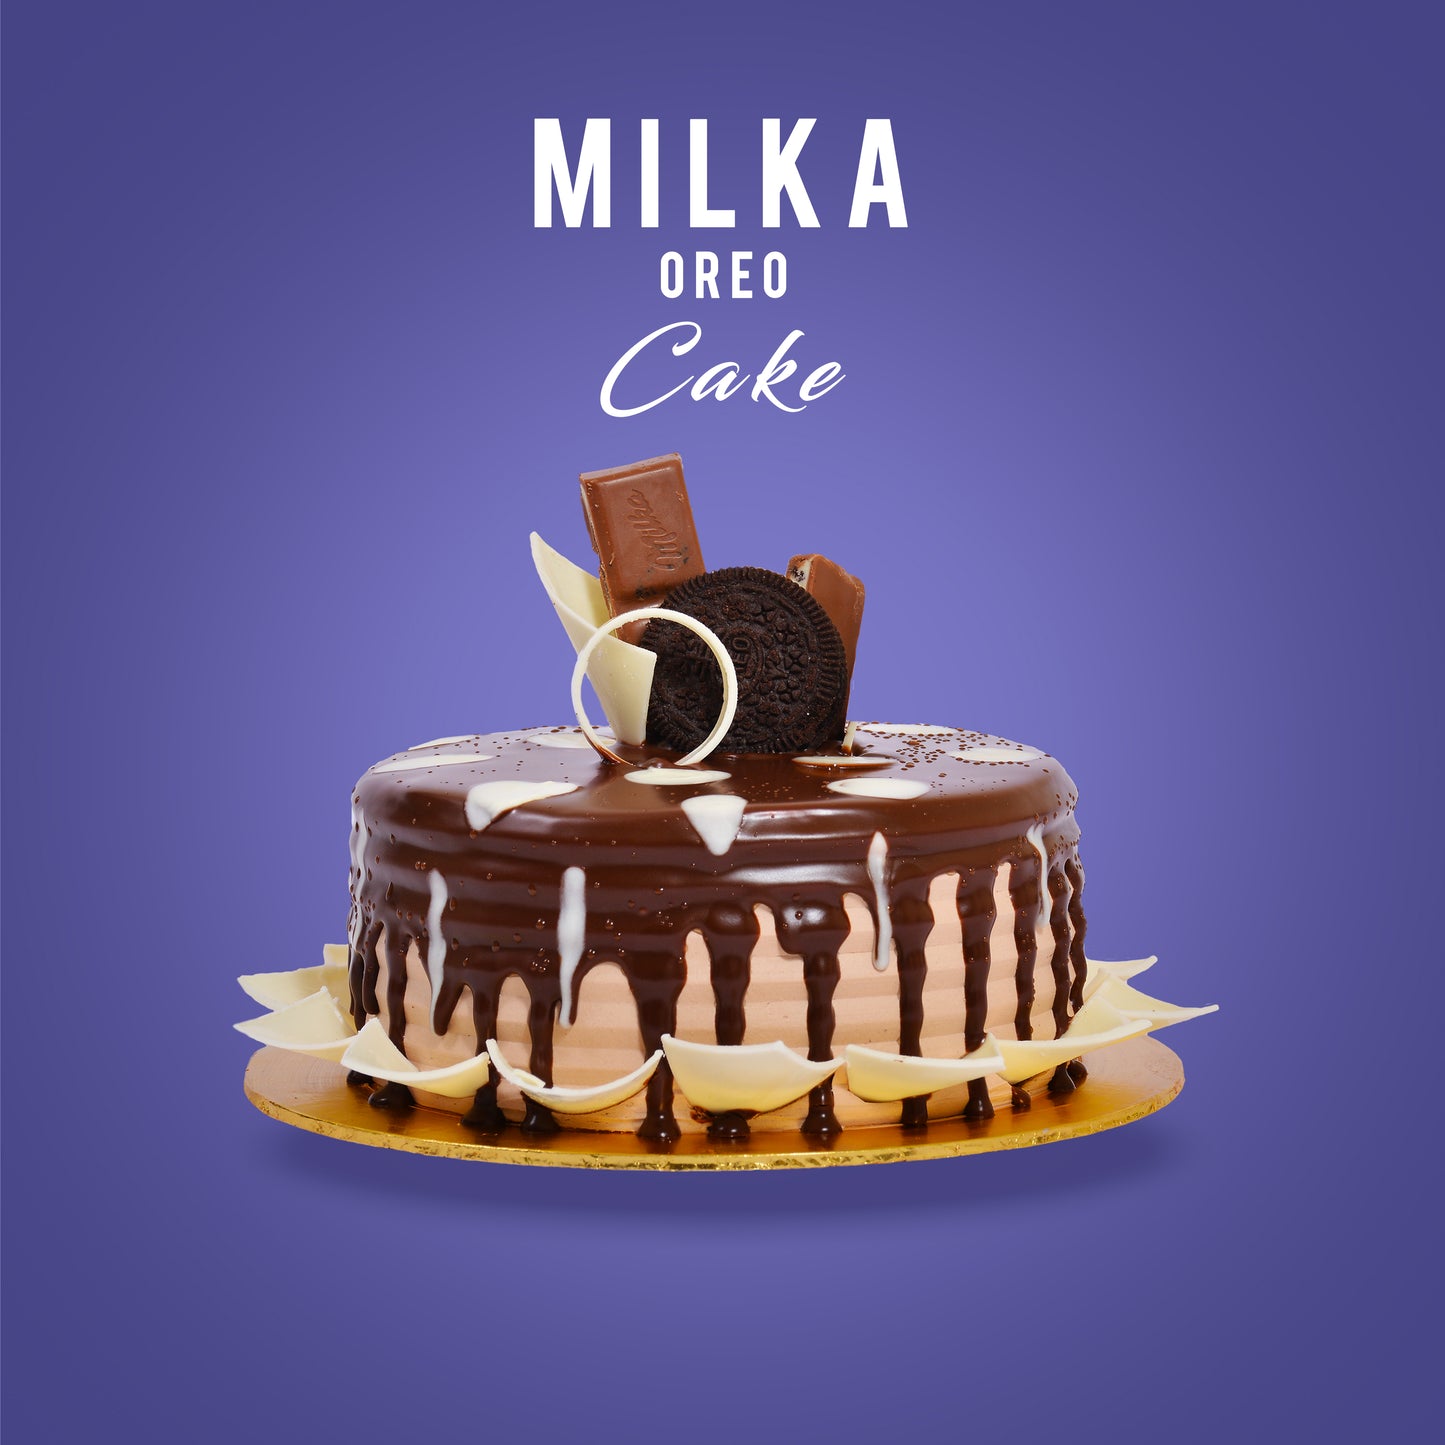 Milka Oreo Cake